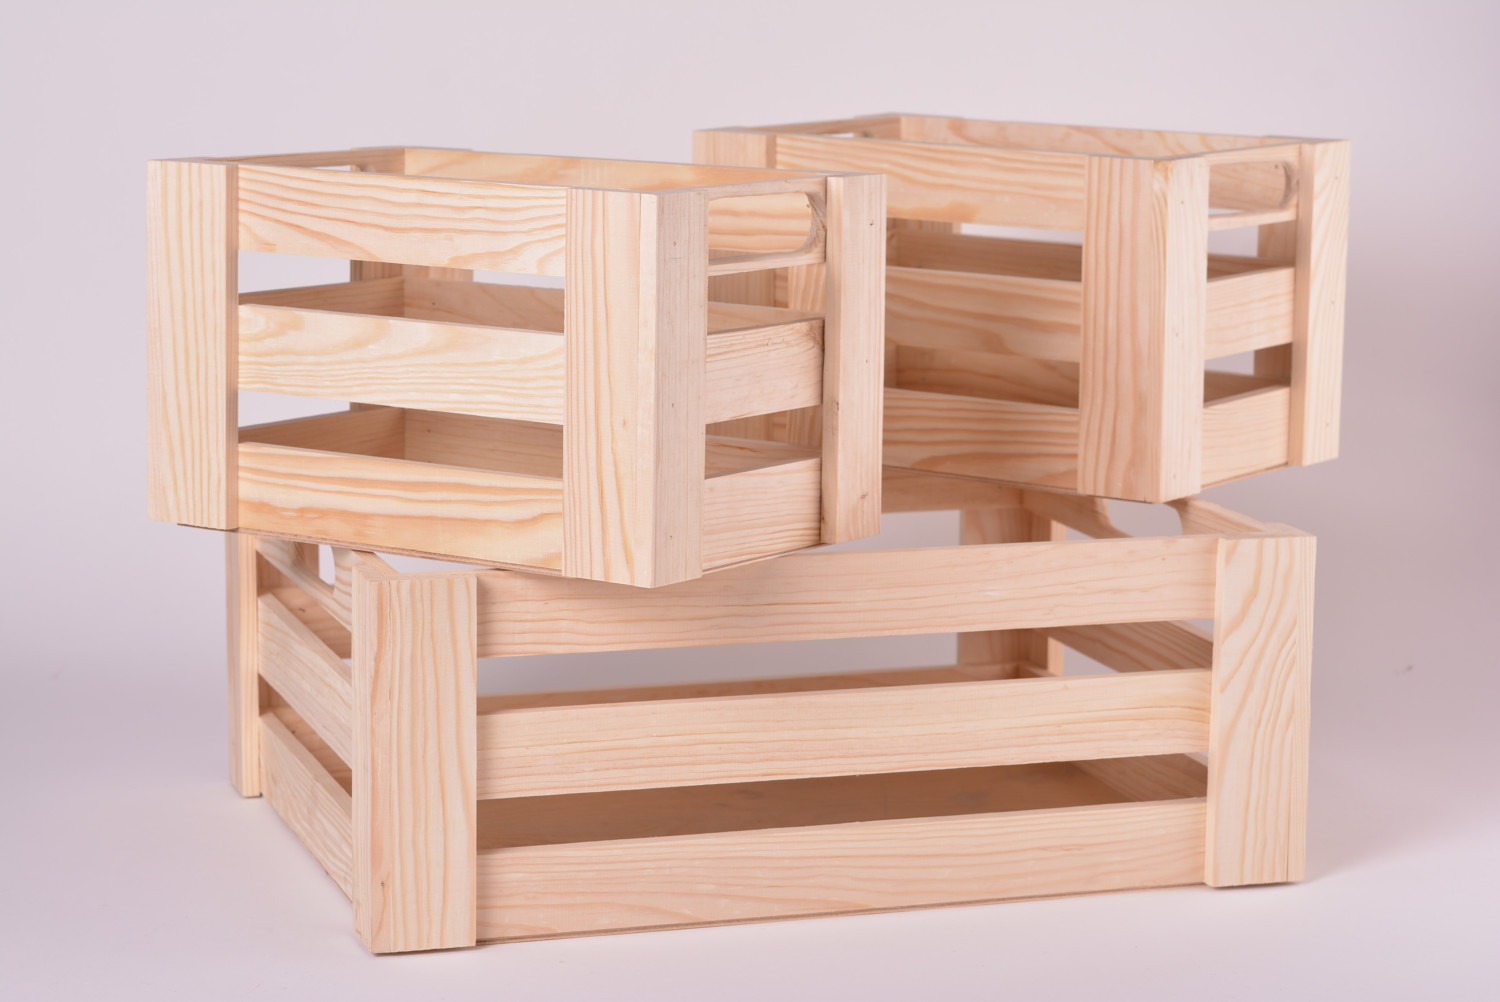 Wooden box handmade box for kitchen interior box handcrafted box for storage photo 3